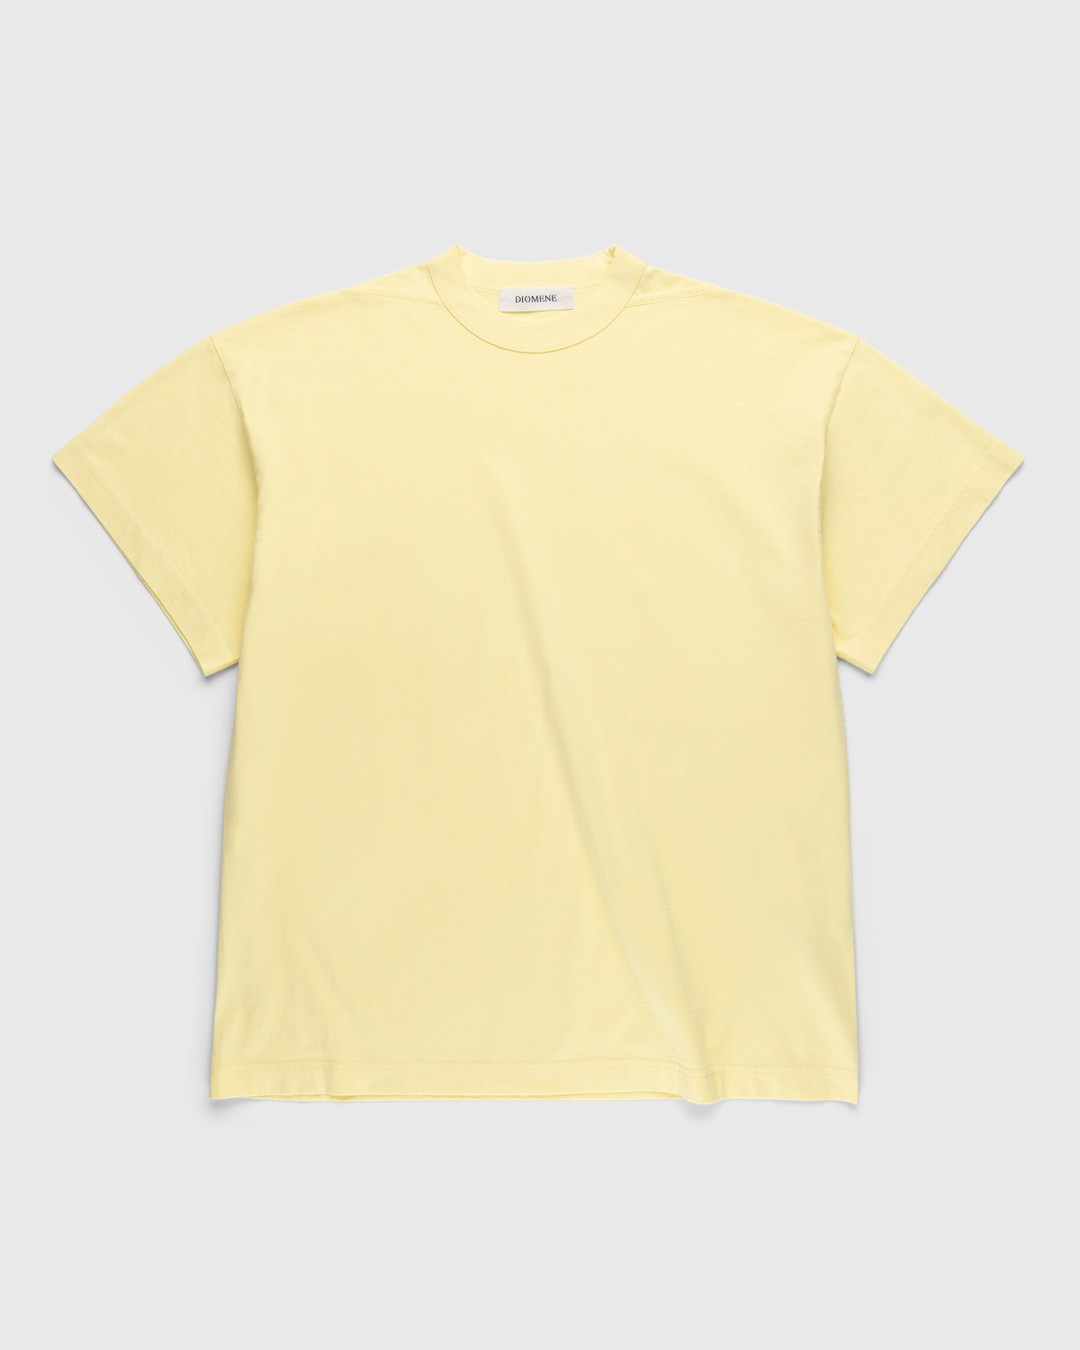 Diomene by Damir Doma – Cotton Crewneck T-Shirt Lemonade - T-shirts - Yellow - Image 1